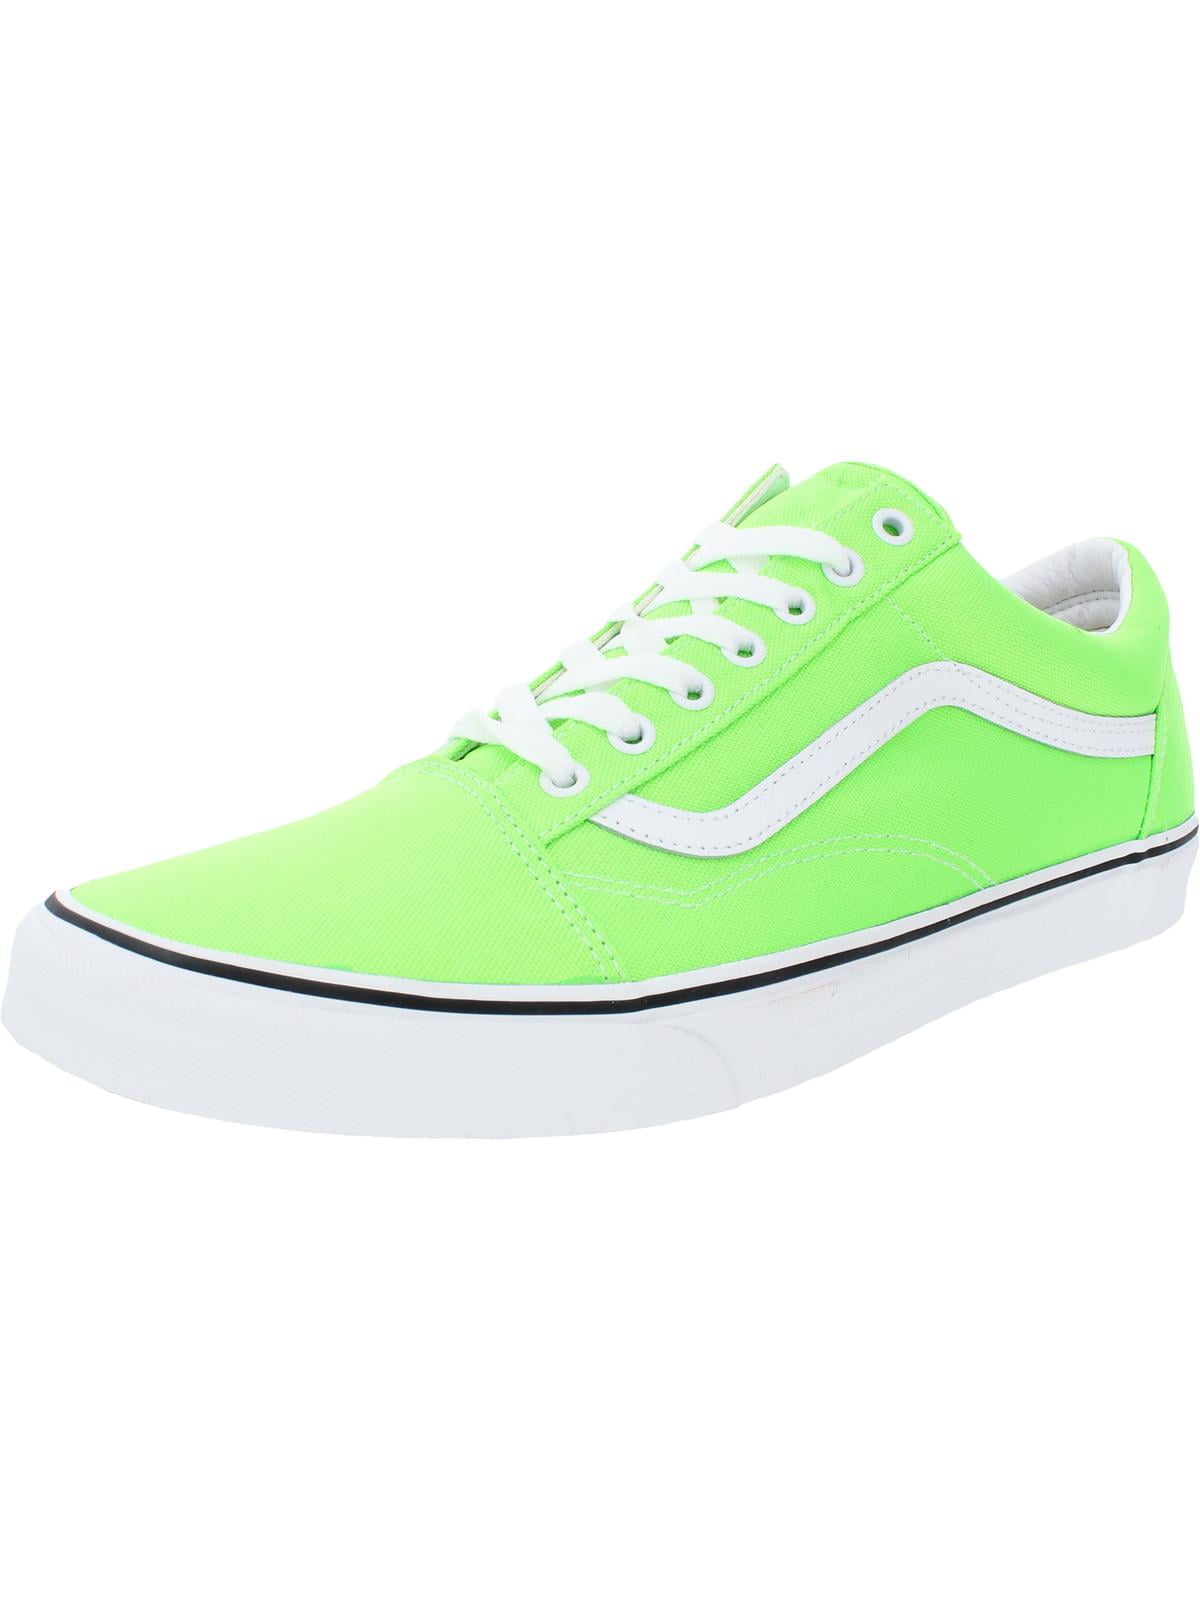 vans shoes for girls green